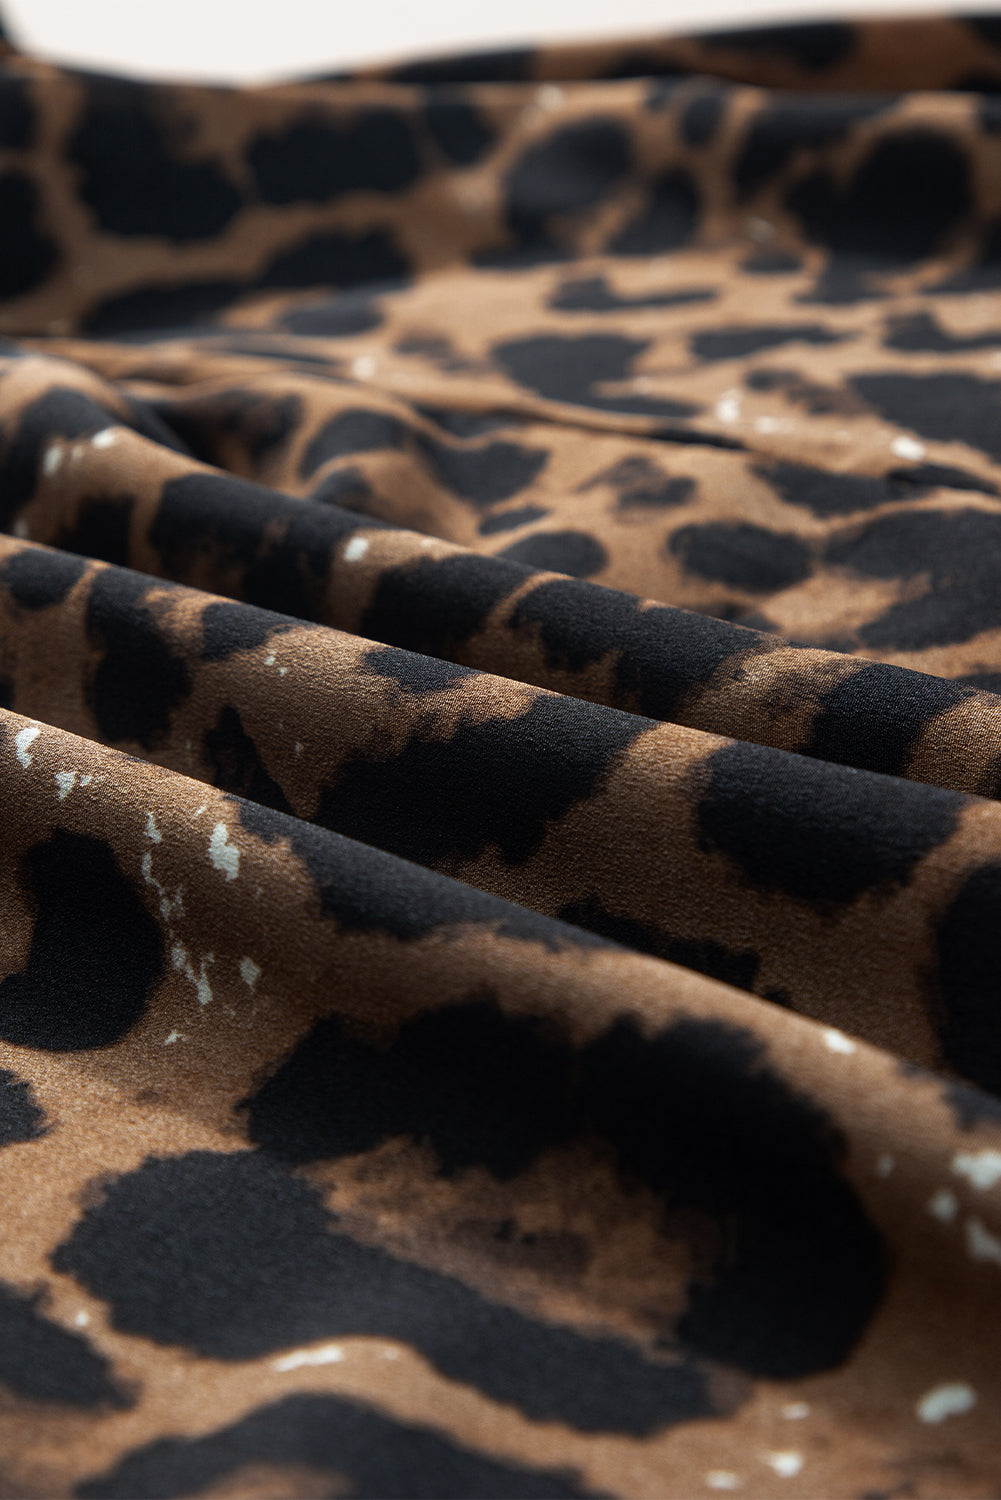 Black Flutter Sleeve Bodice Splicing Leopard Print Dress Blue Zone Planet